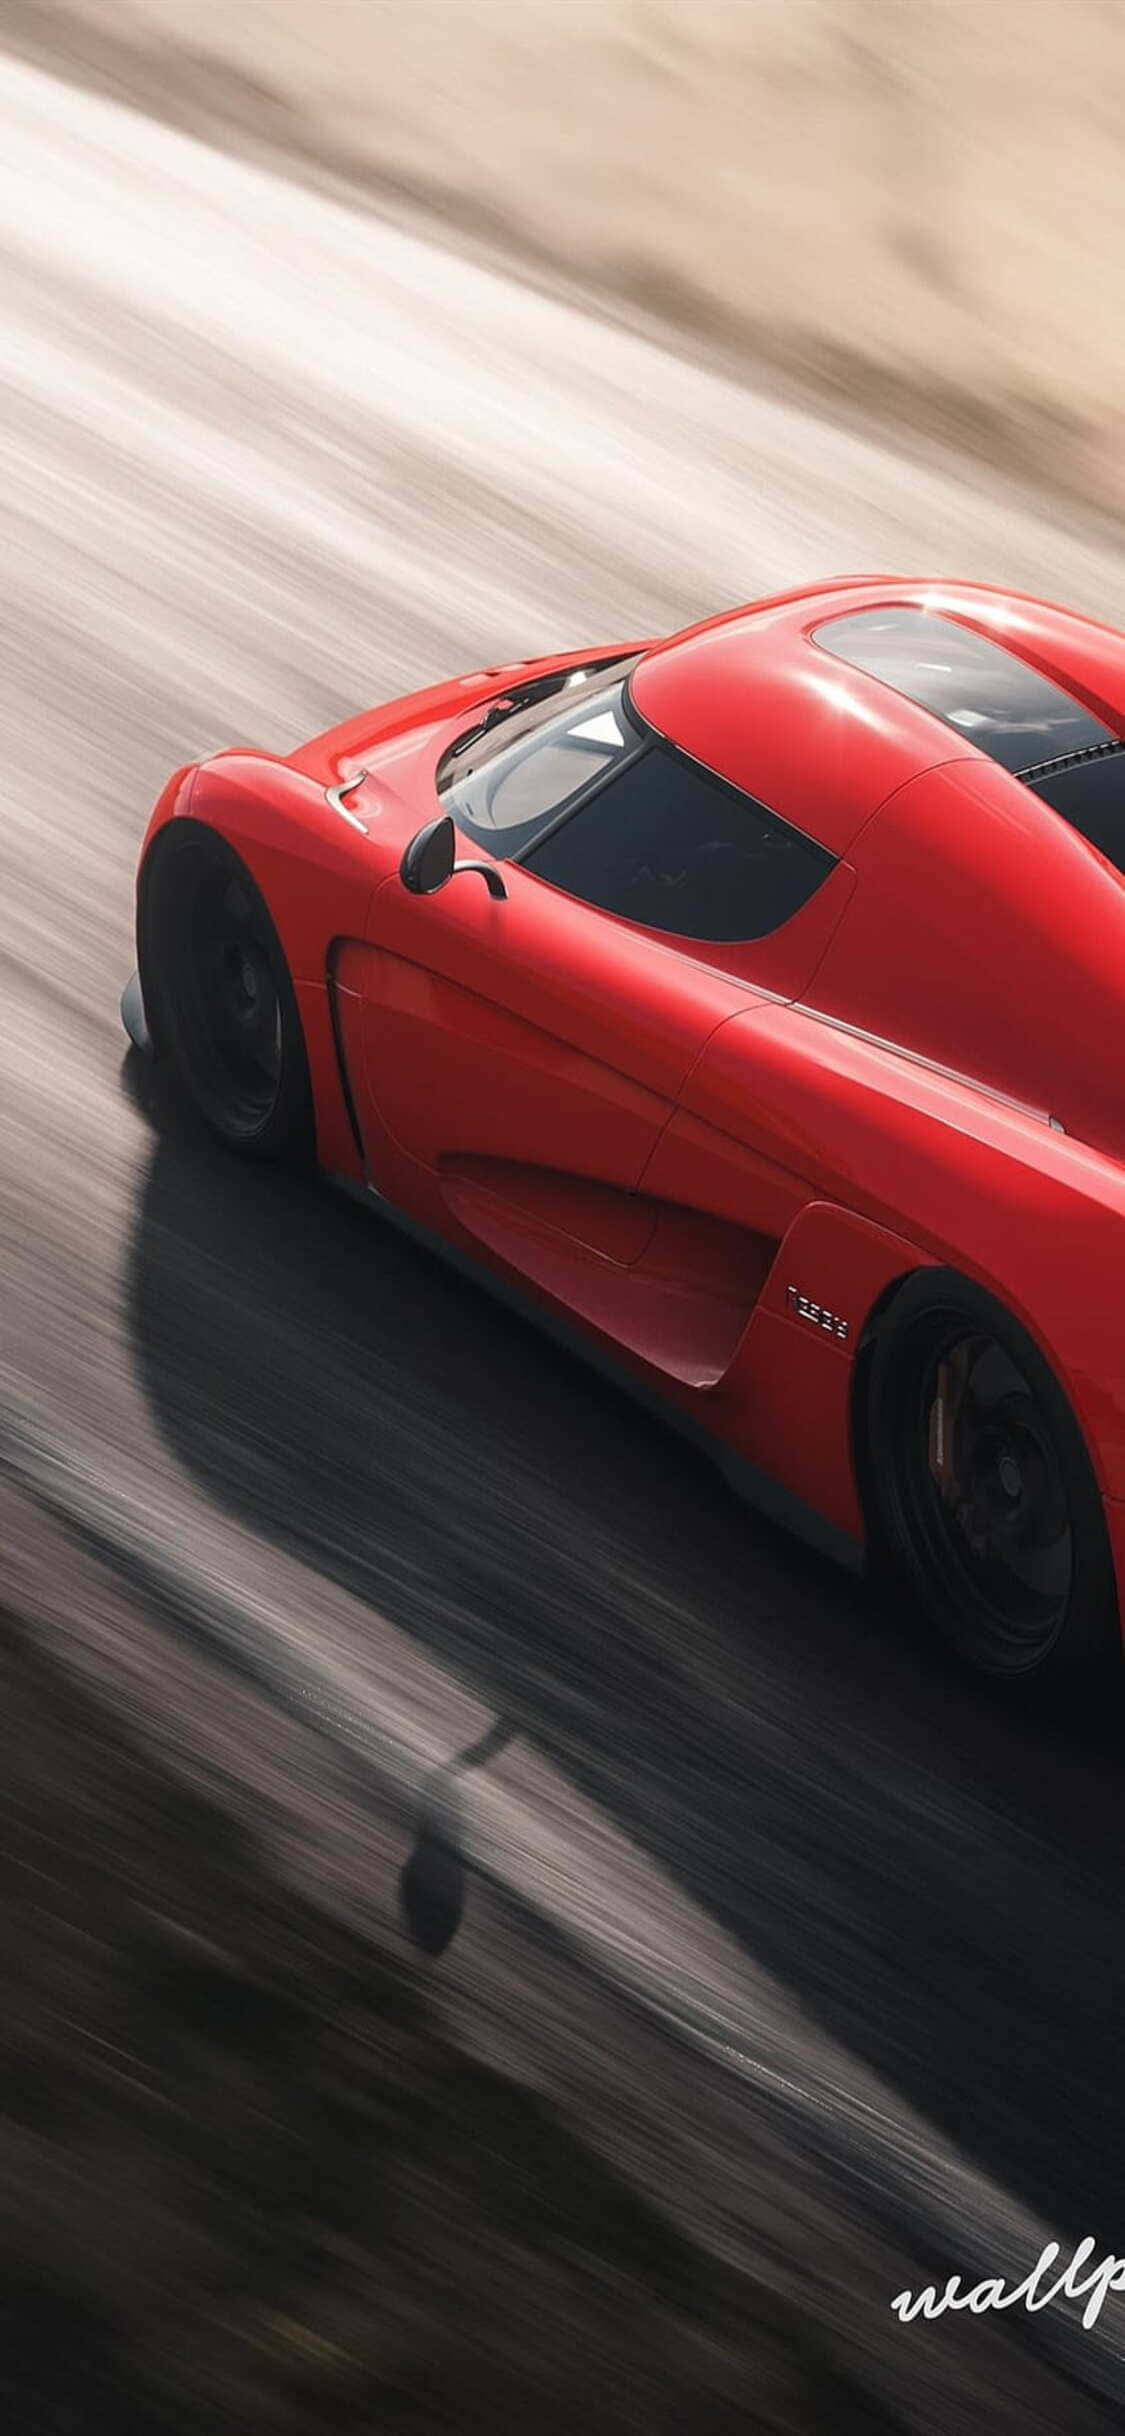 Fondode Pantalla De Forza Motorsport 7 Para Iphone X De Koenigsegg Agera Rojo.